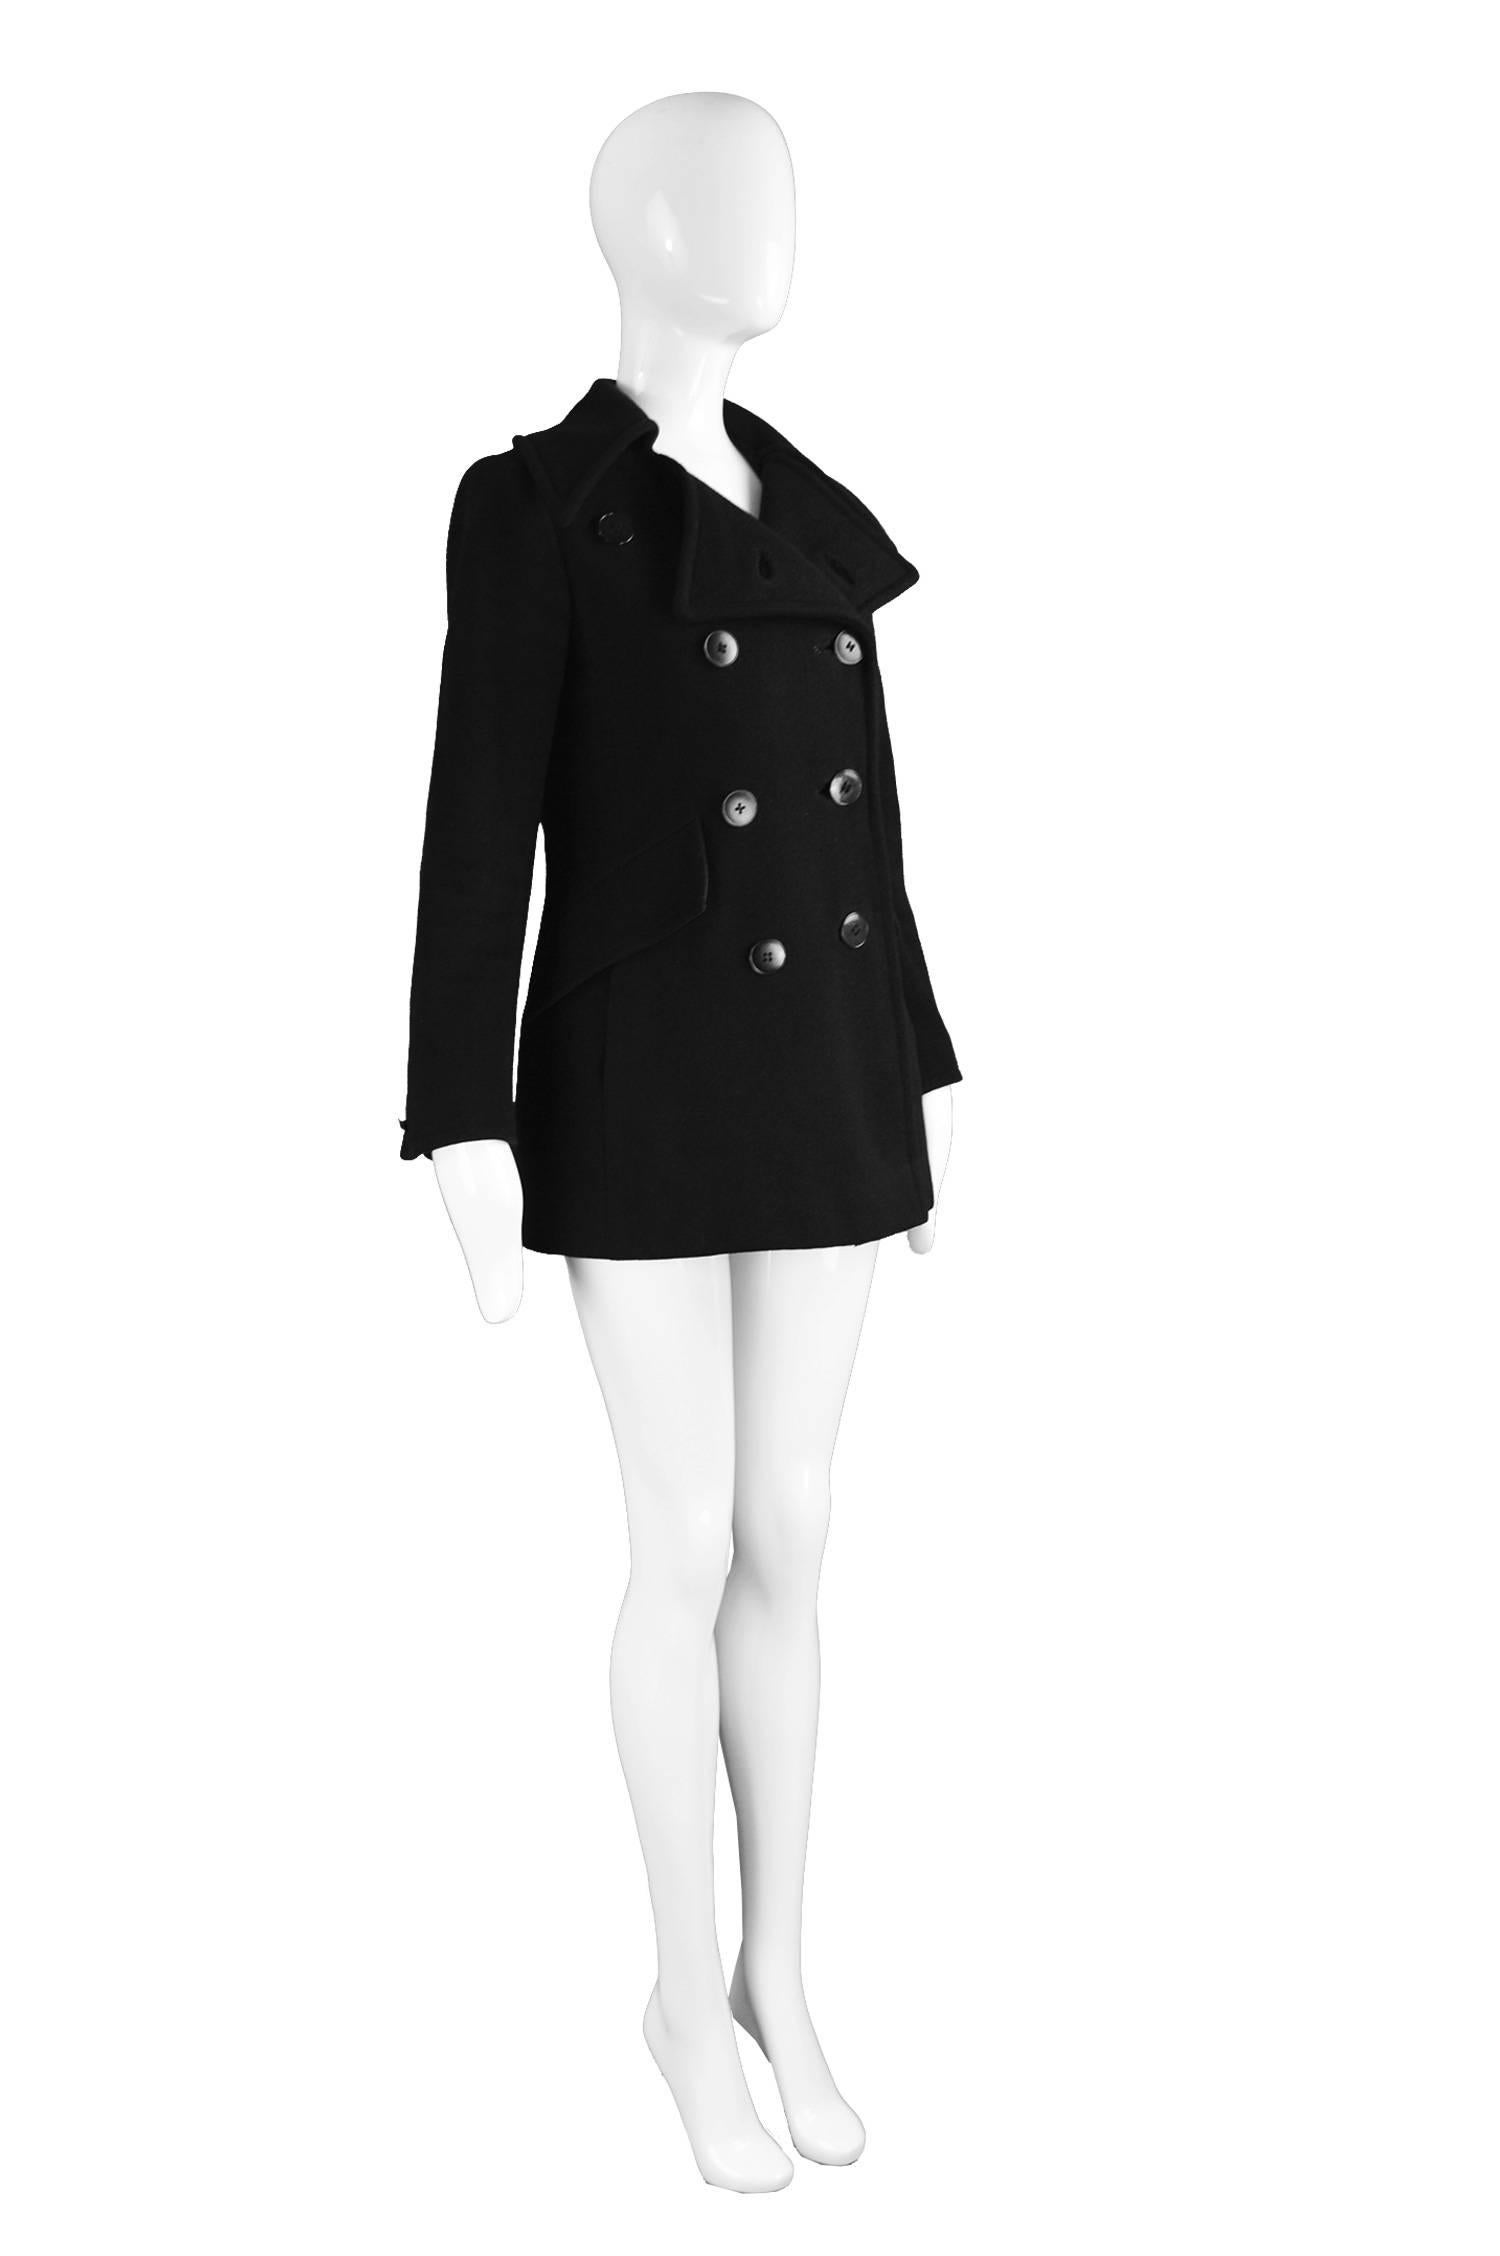 Women's Calvin Klein Vintage Black Wool Double Breasted Pea Coat, 1970s